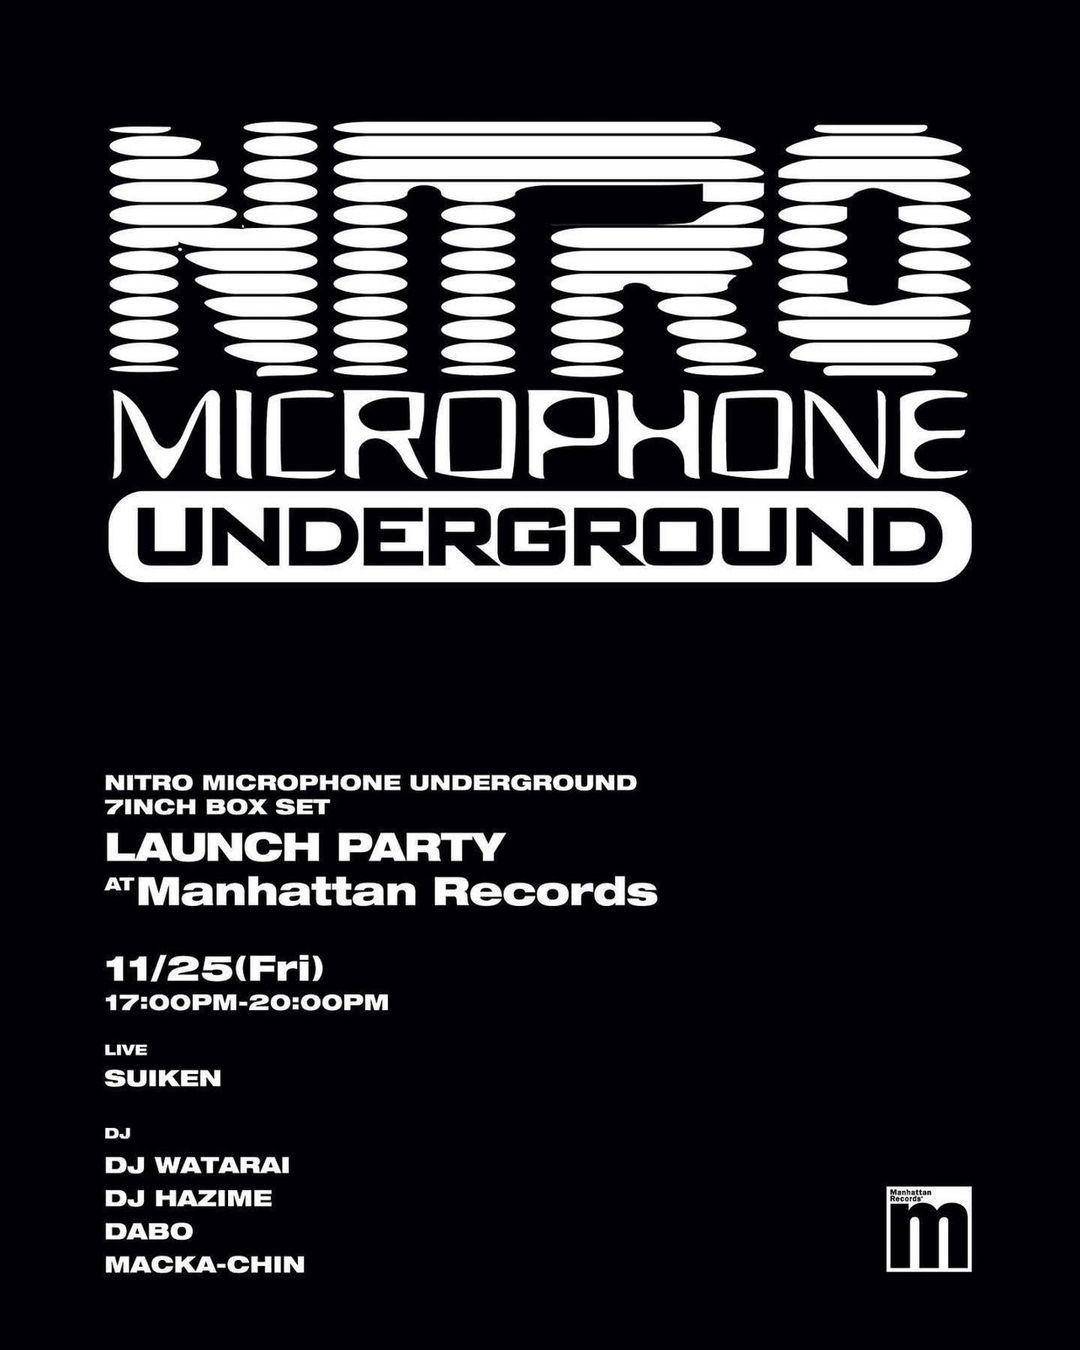 NEWS - NITRO MICROPHONE UNDERGROUND Official Website 